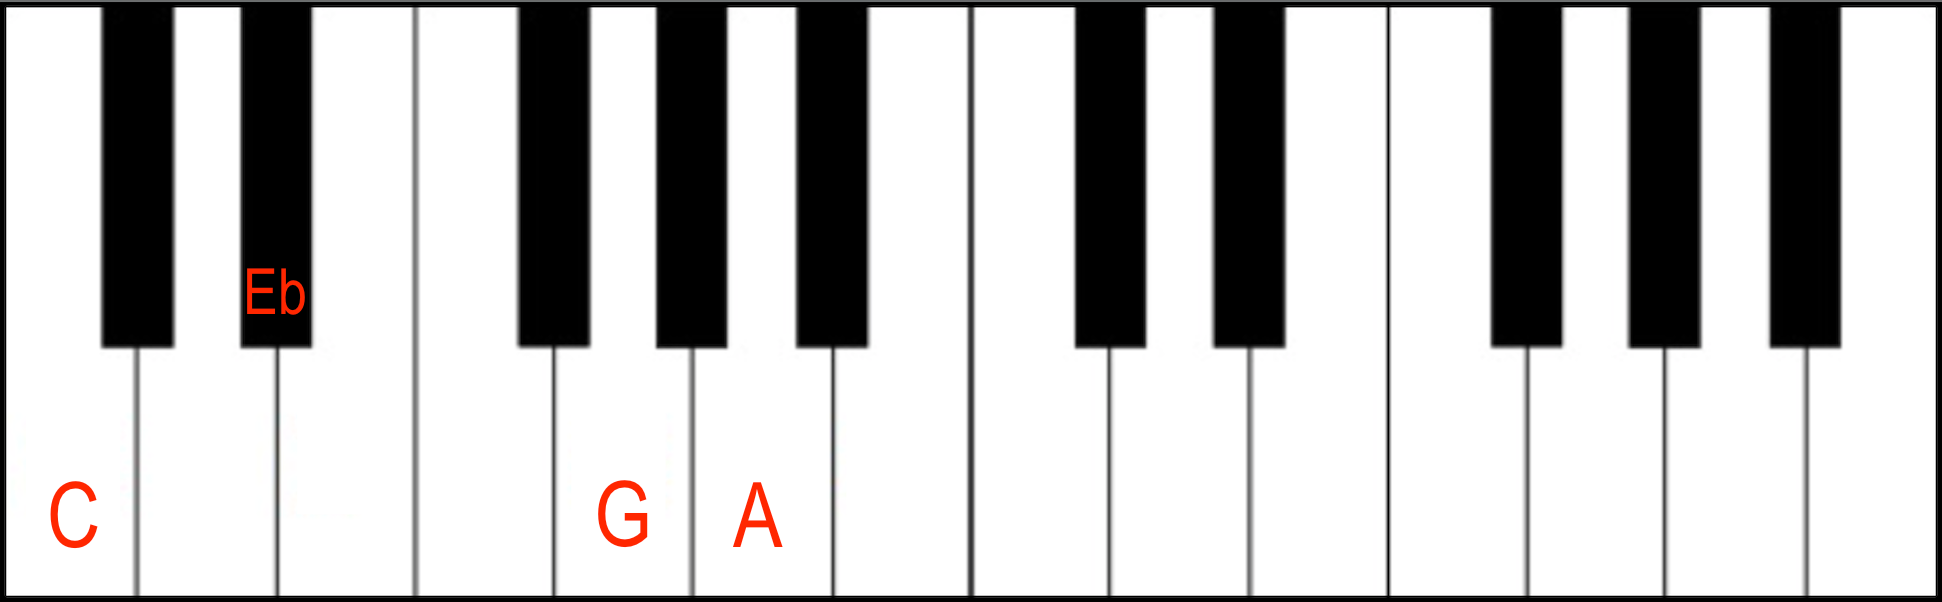 Cm6 piano chord chart